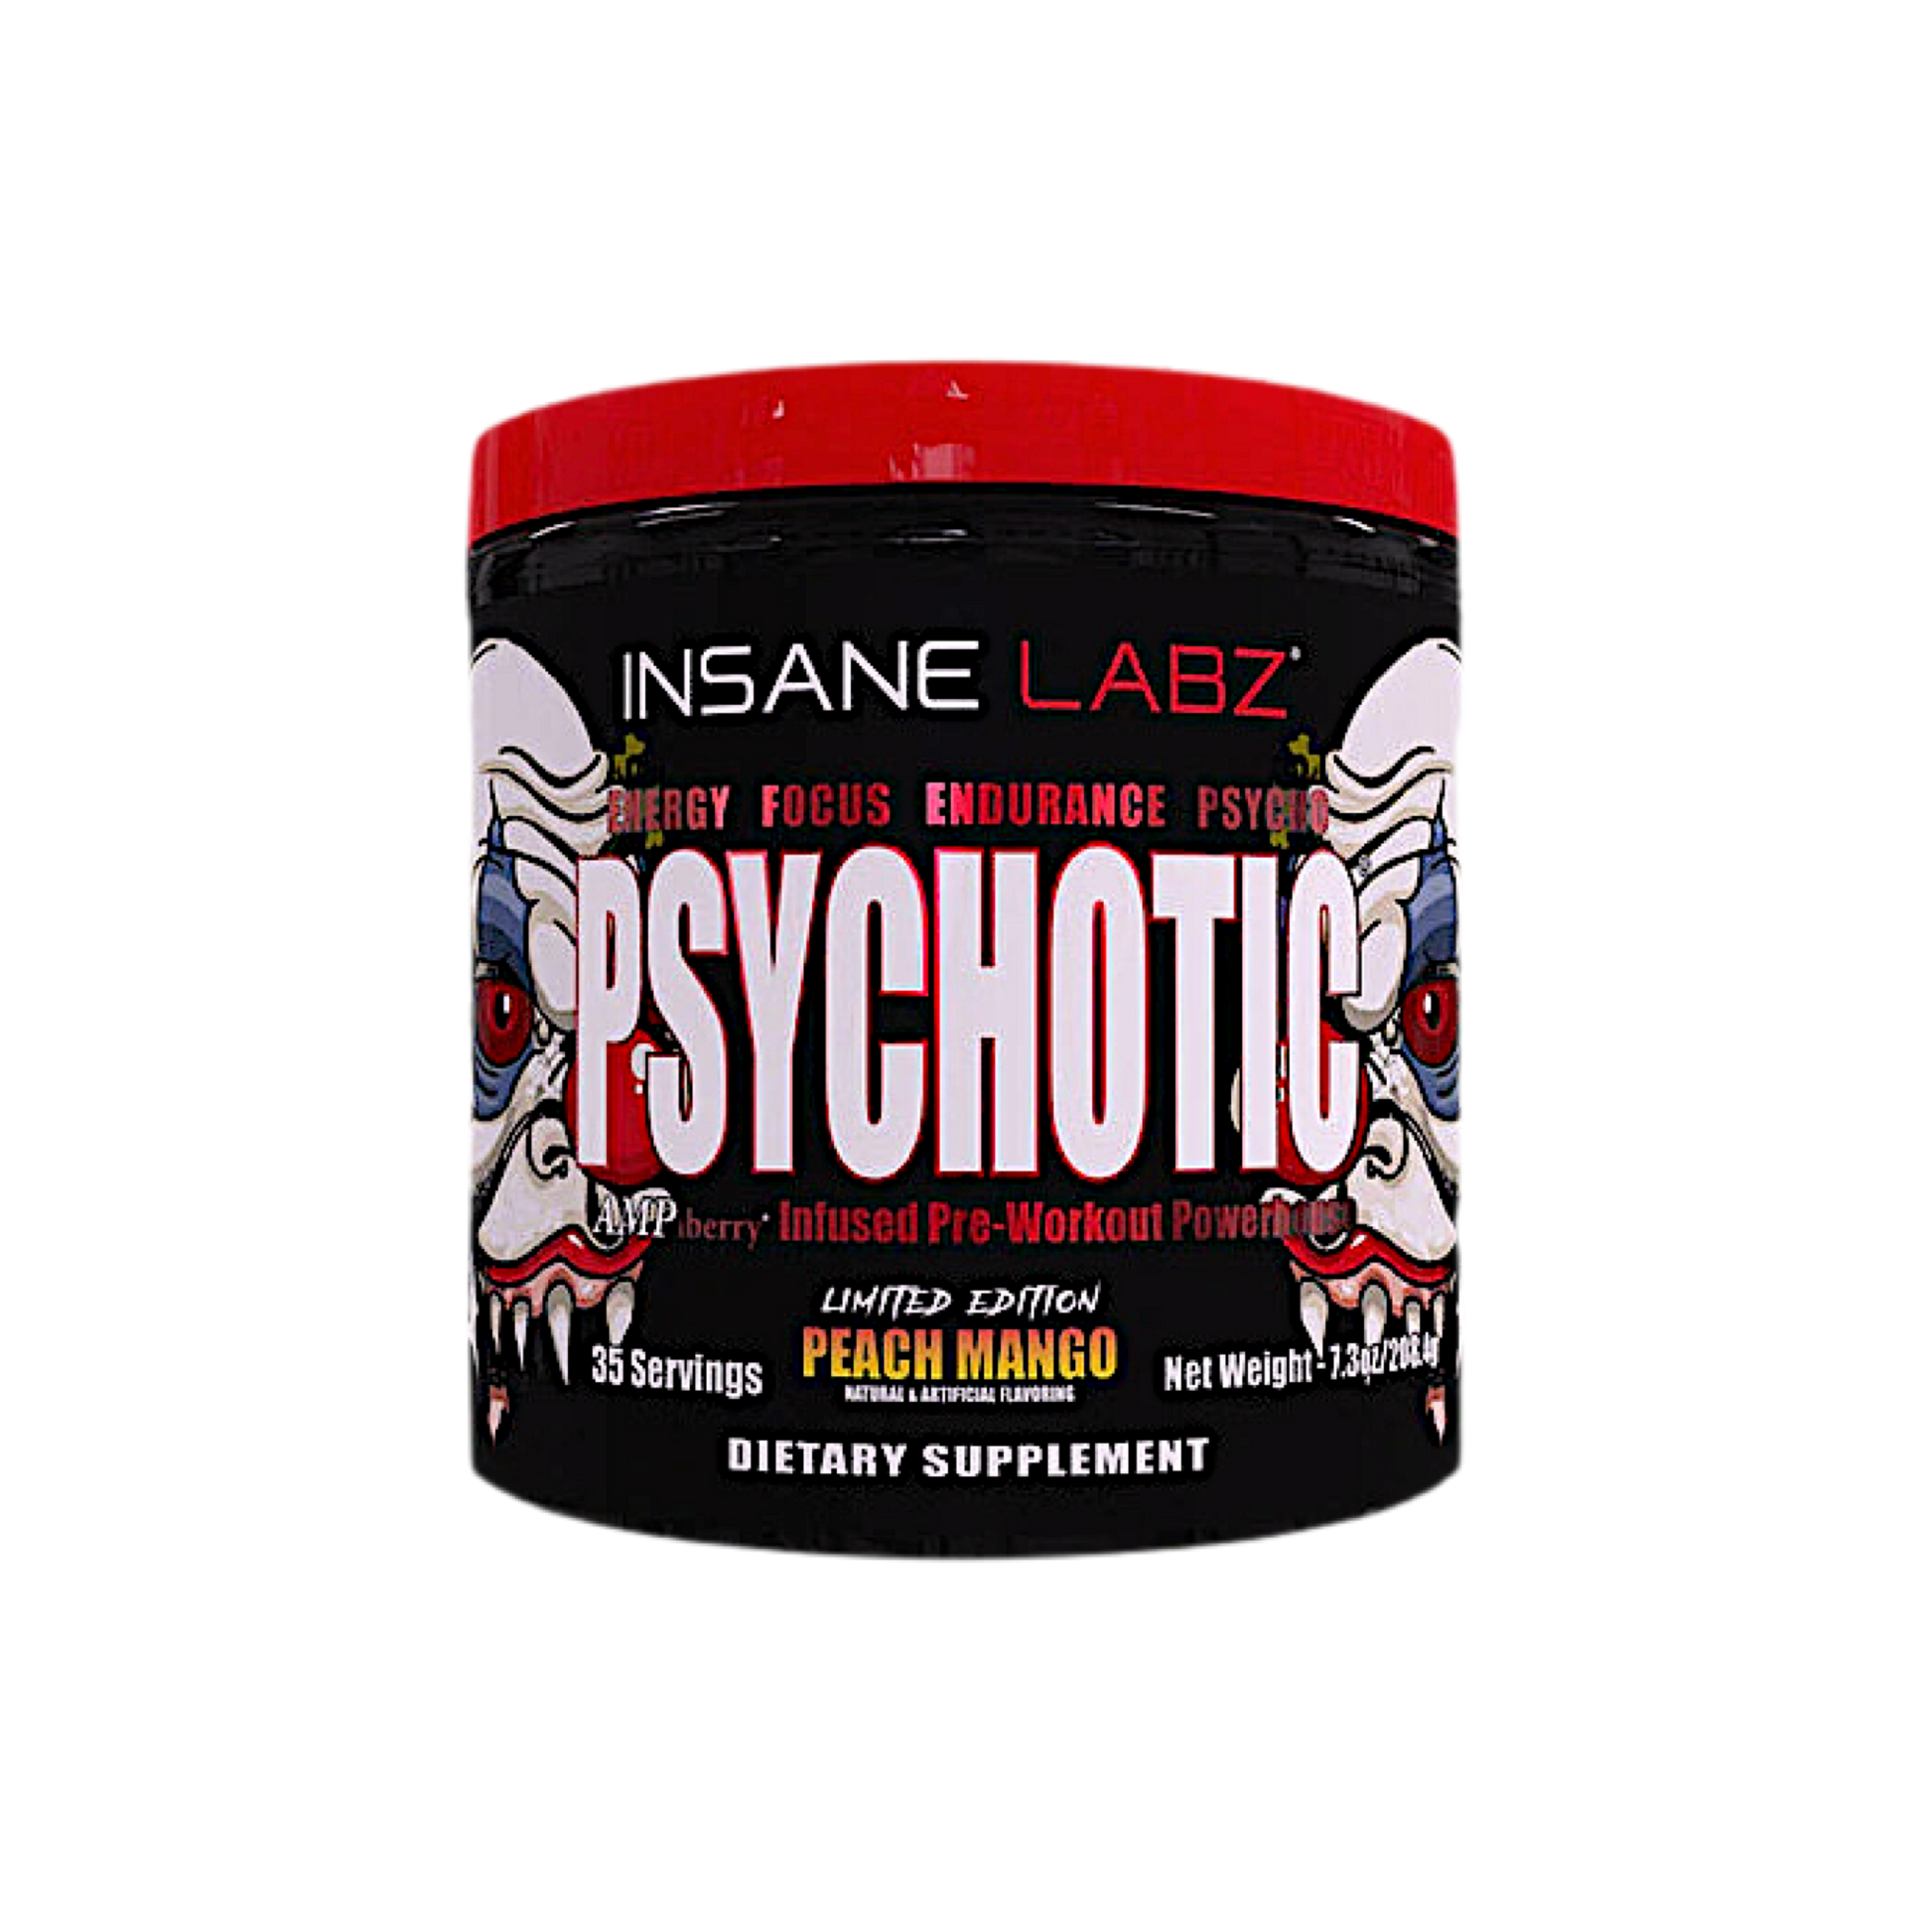 Psychotic Pre-Workout by Insane Labz - Mass Cast